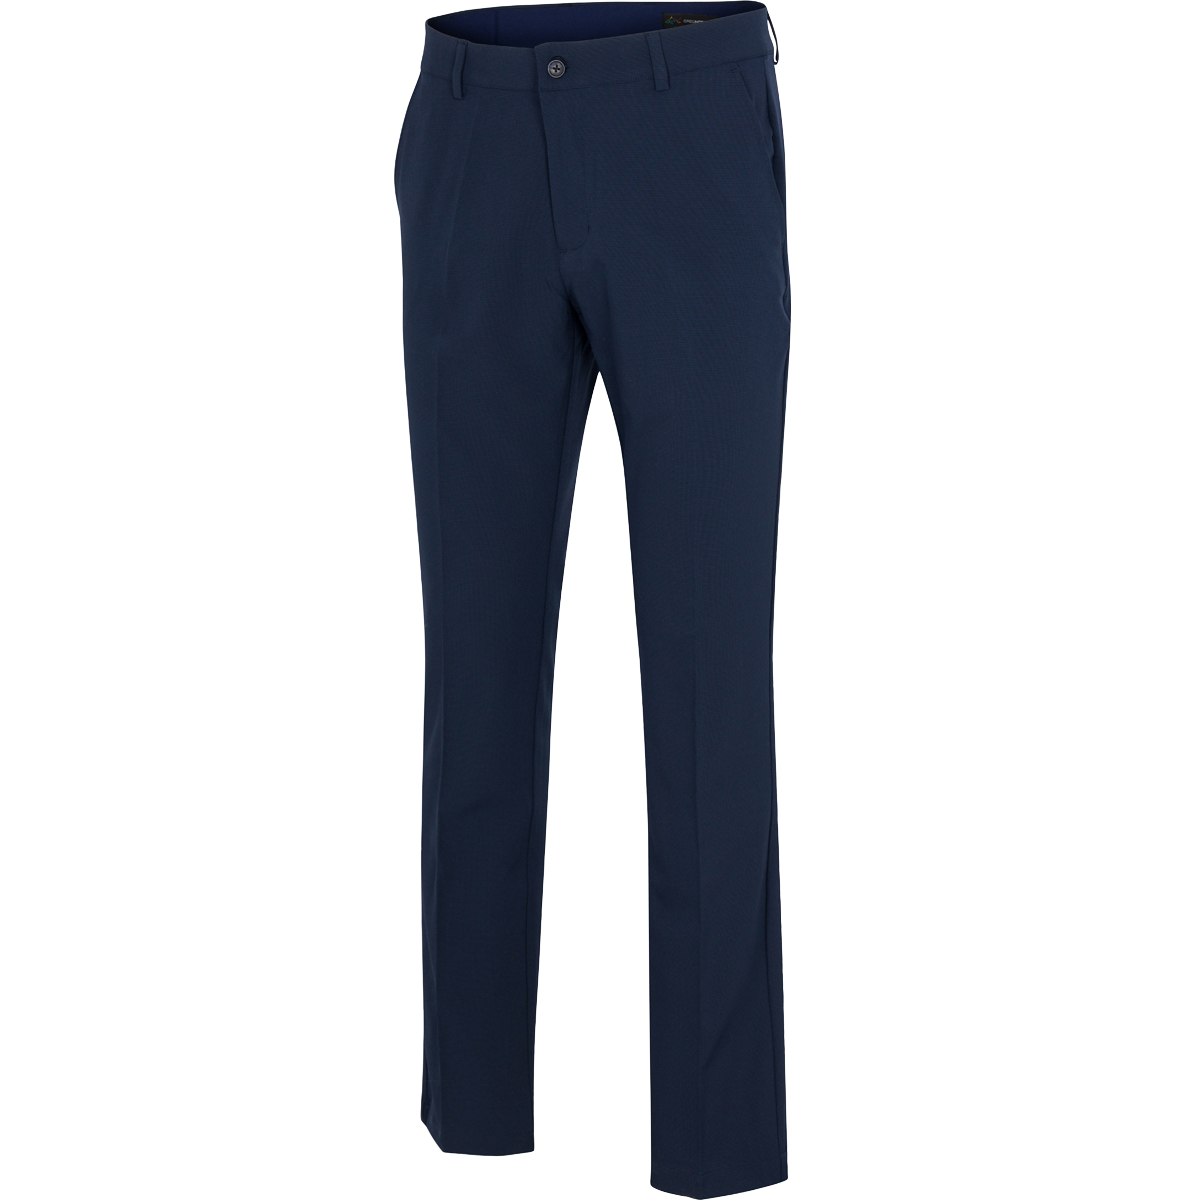 Greg Norman Men's 5 Pocket Travel Pant (32W x 30L, Navy), Pants -   Canada